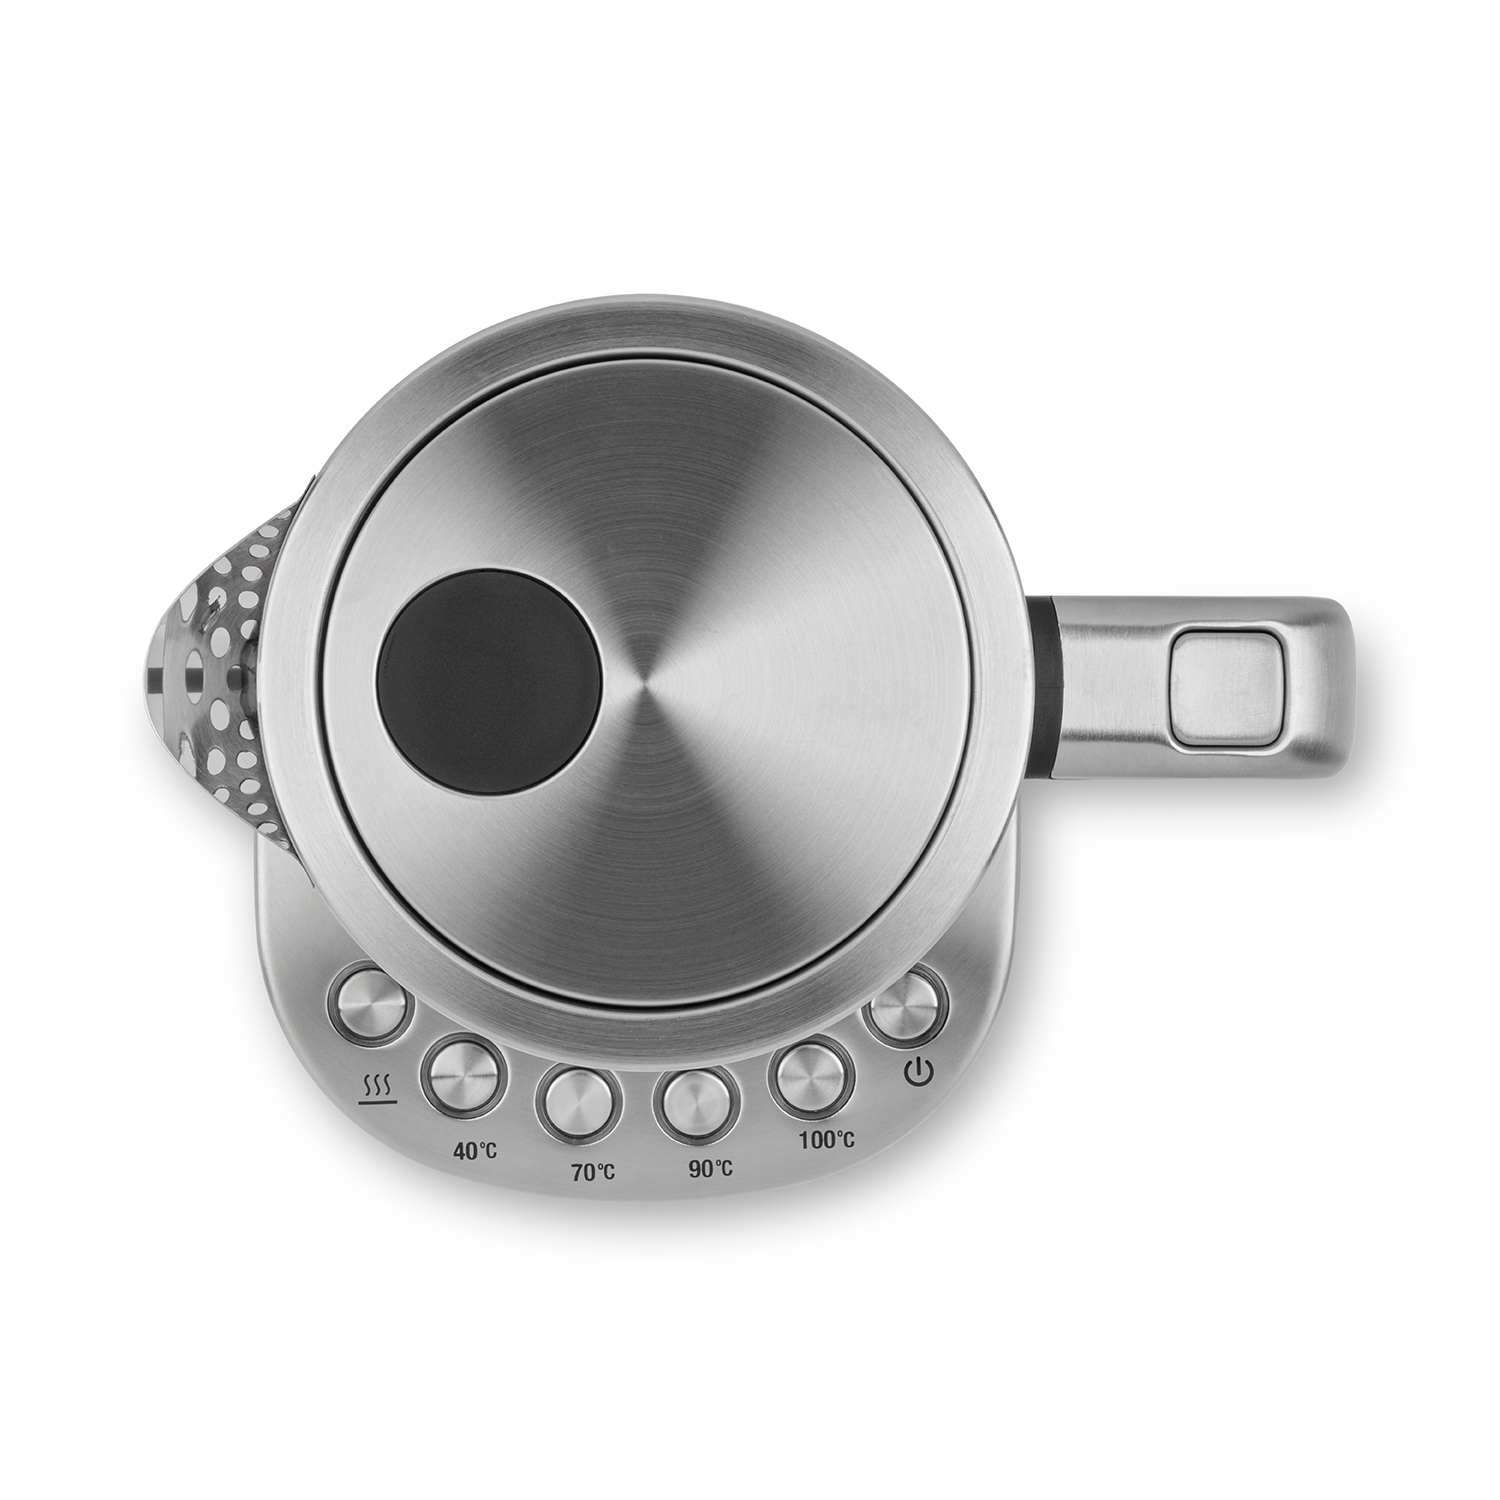 Glass kettle 2200 watts | Adjustable temp.